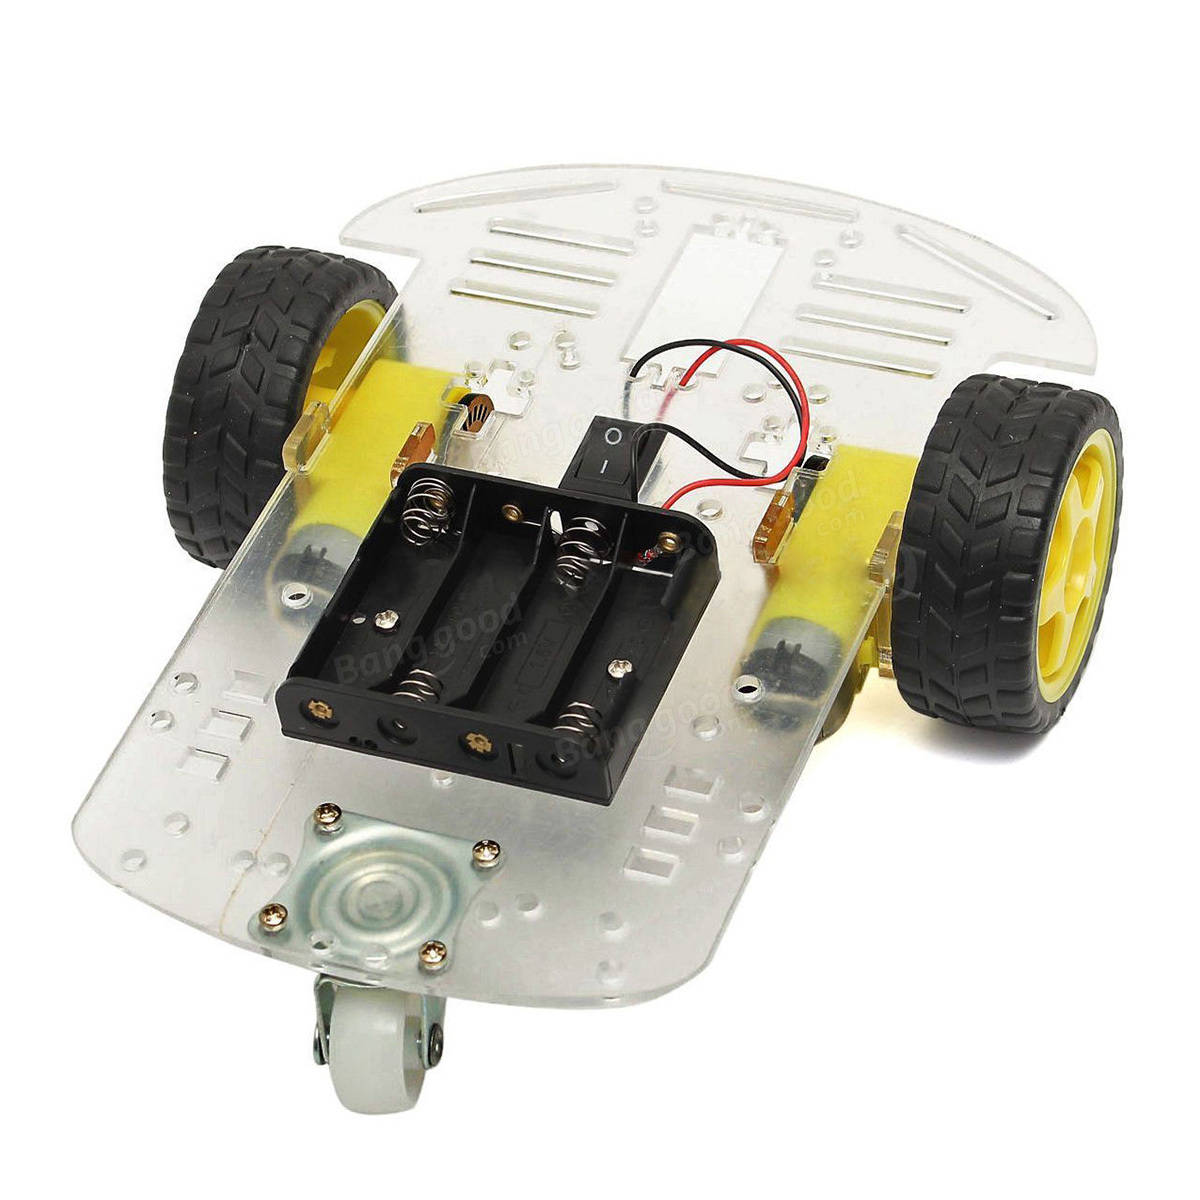 Smart Robot Chassis Kit 1.jpg